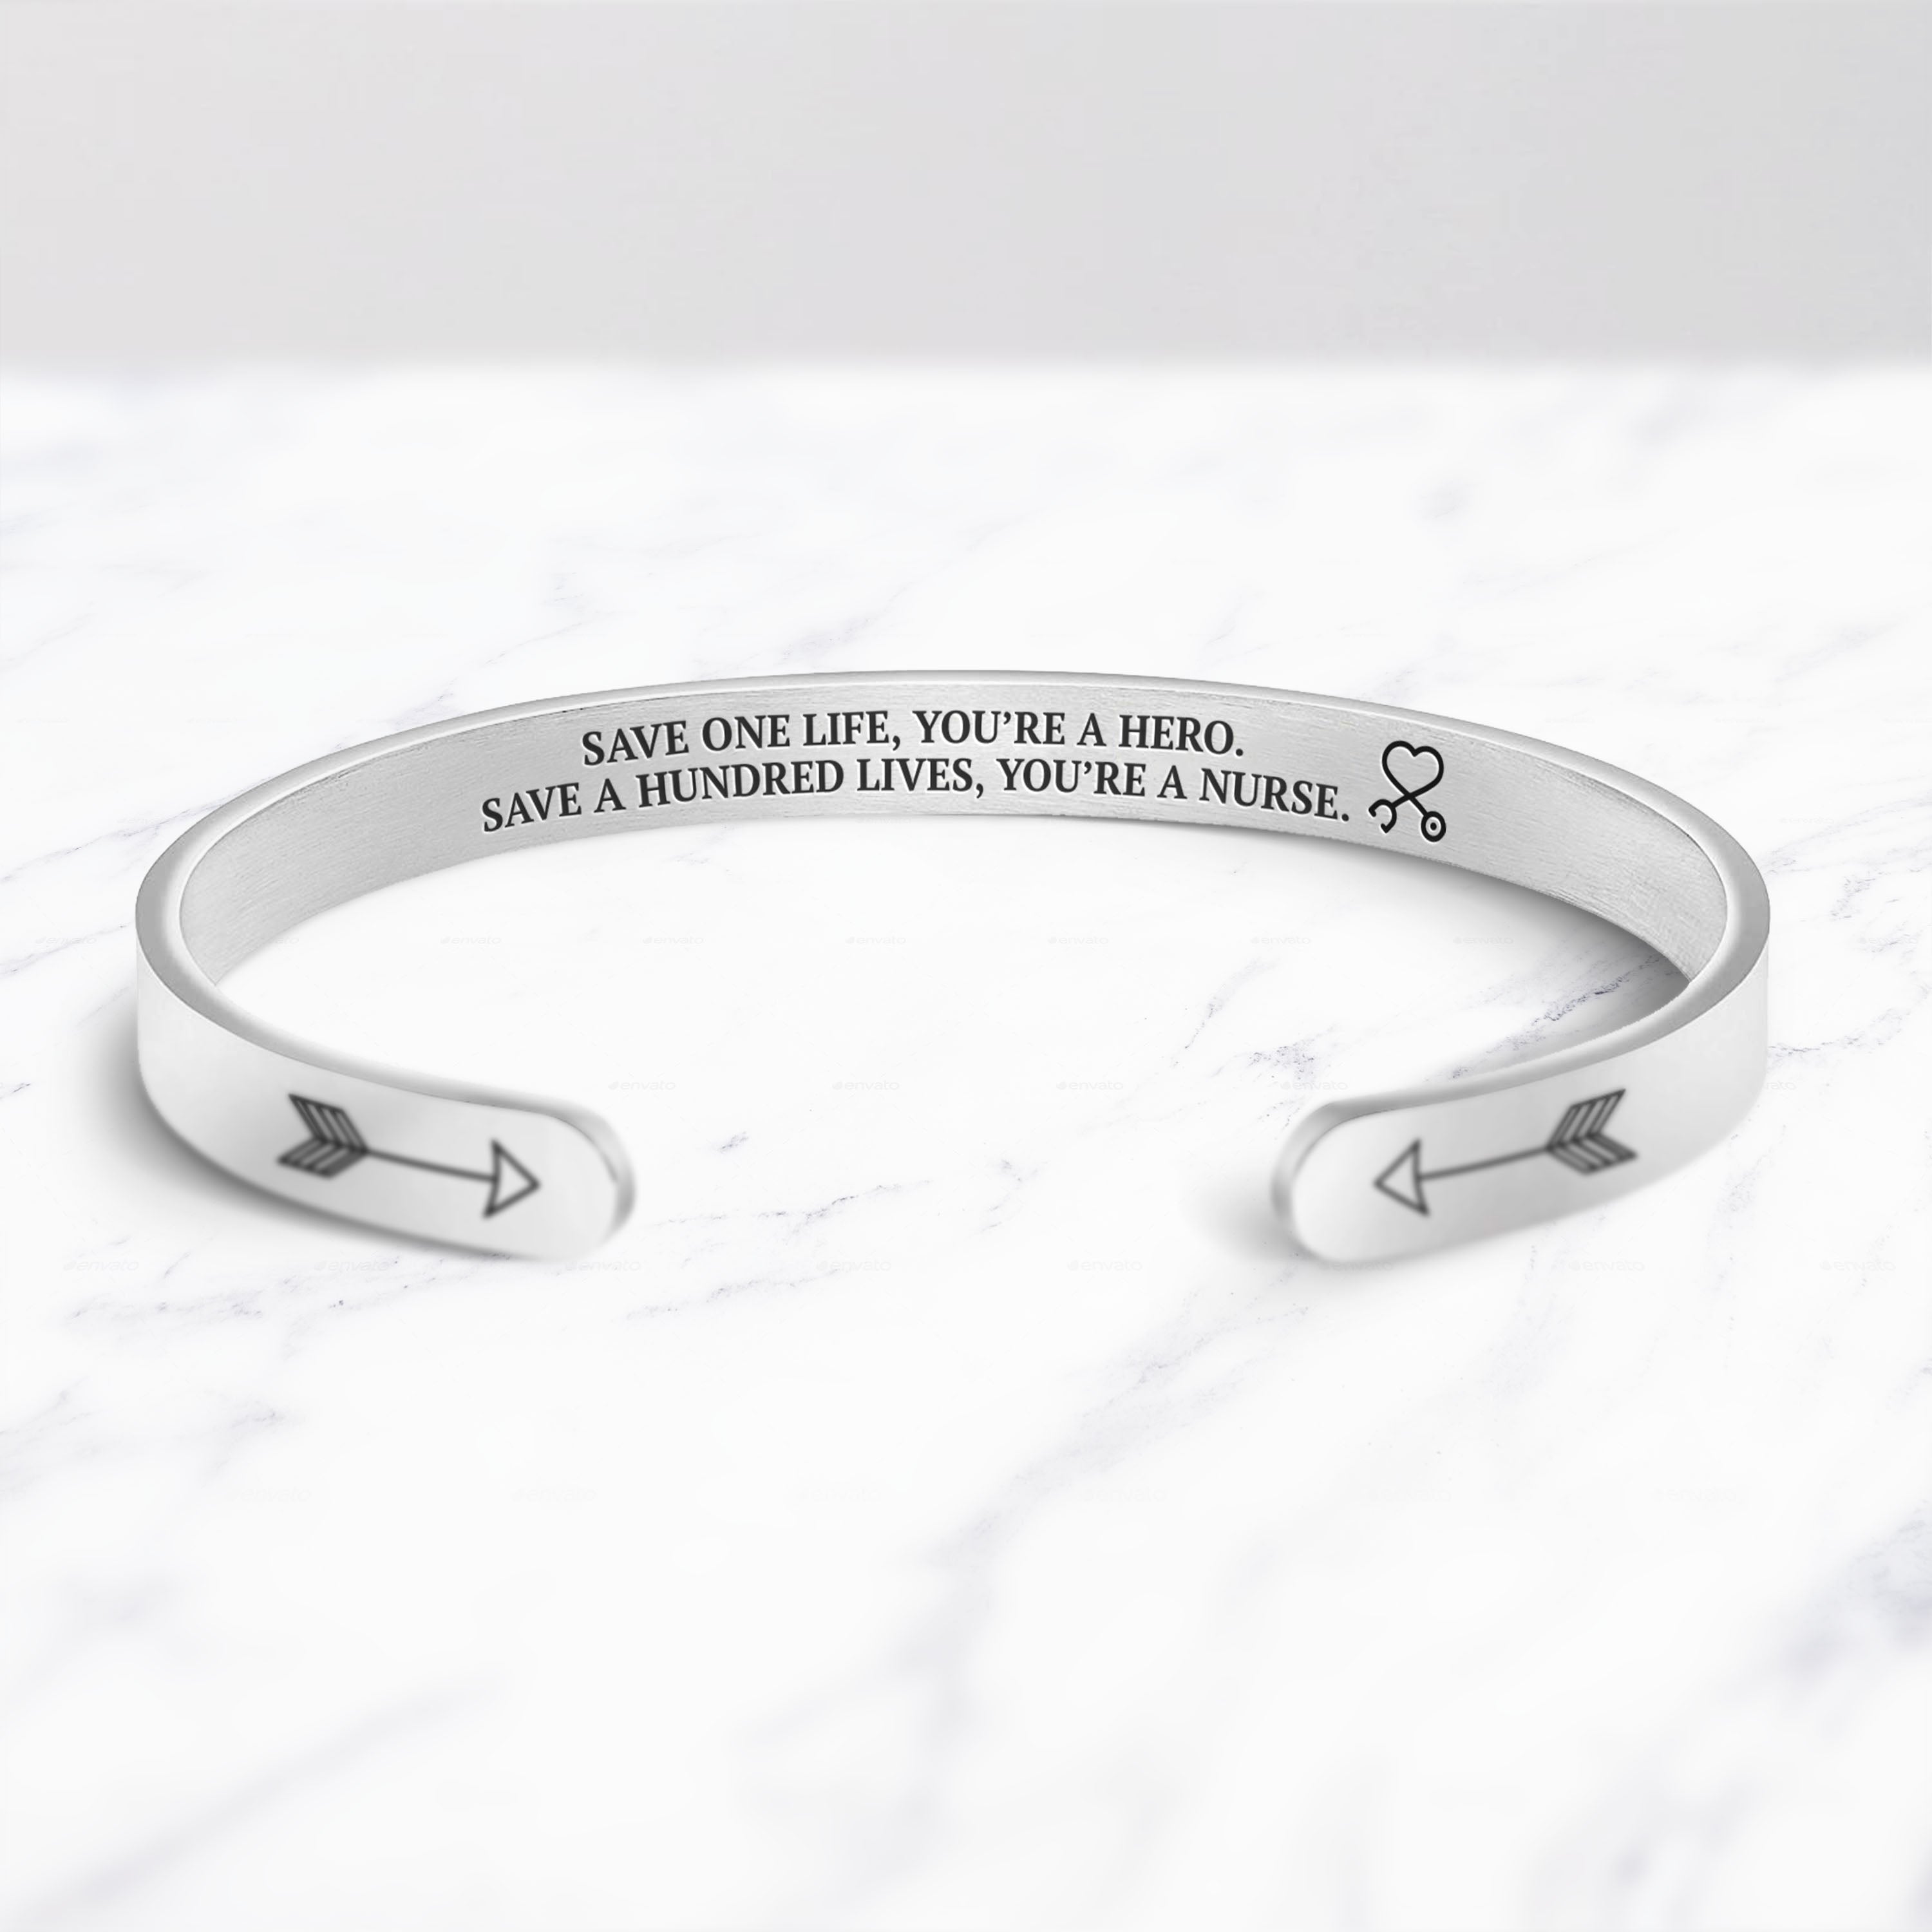 Save a hundred lives, You're a nurse Cuff Bracelet bracelet with silver plating on a marble background 